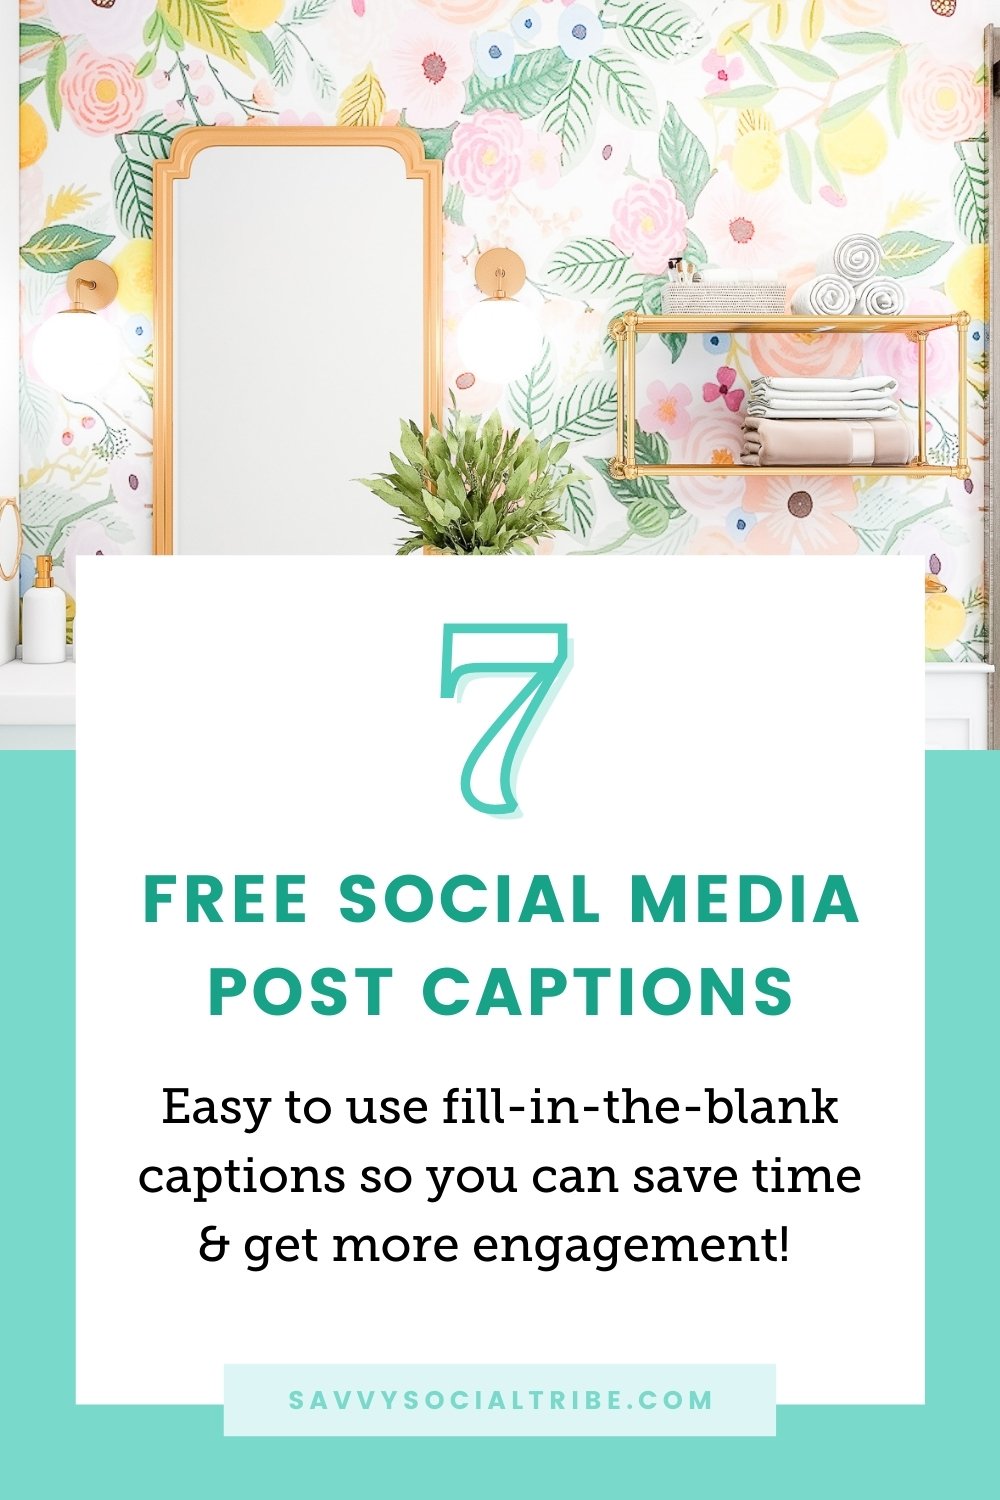 free-caption-templates-savvy-2-0-anchor-design-co